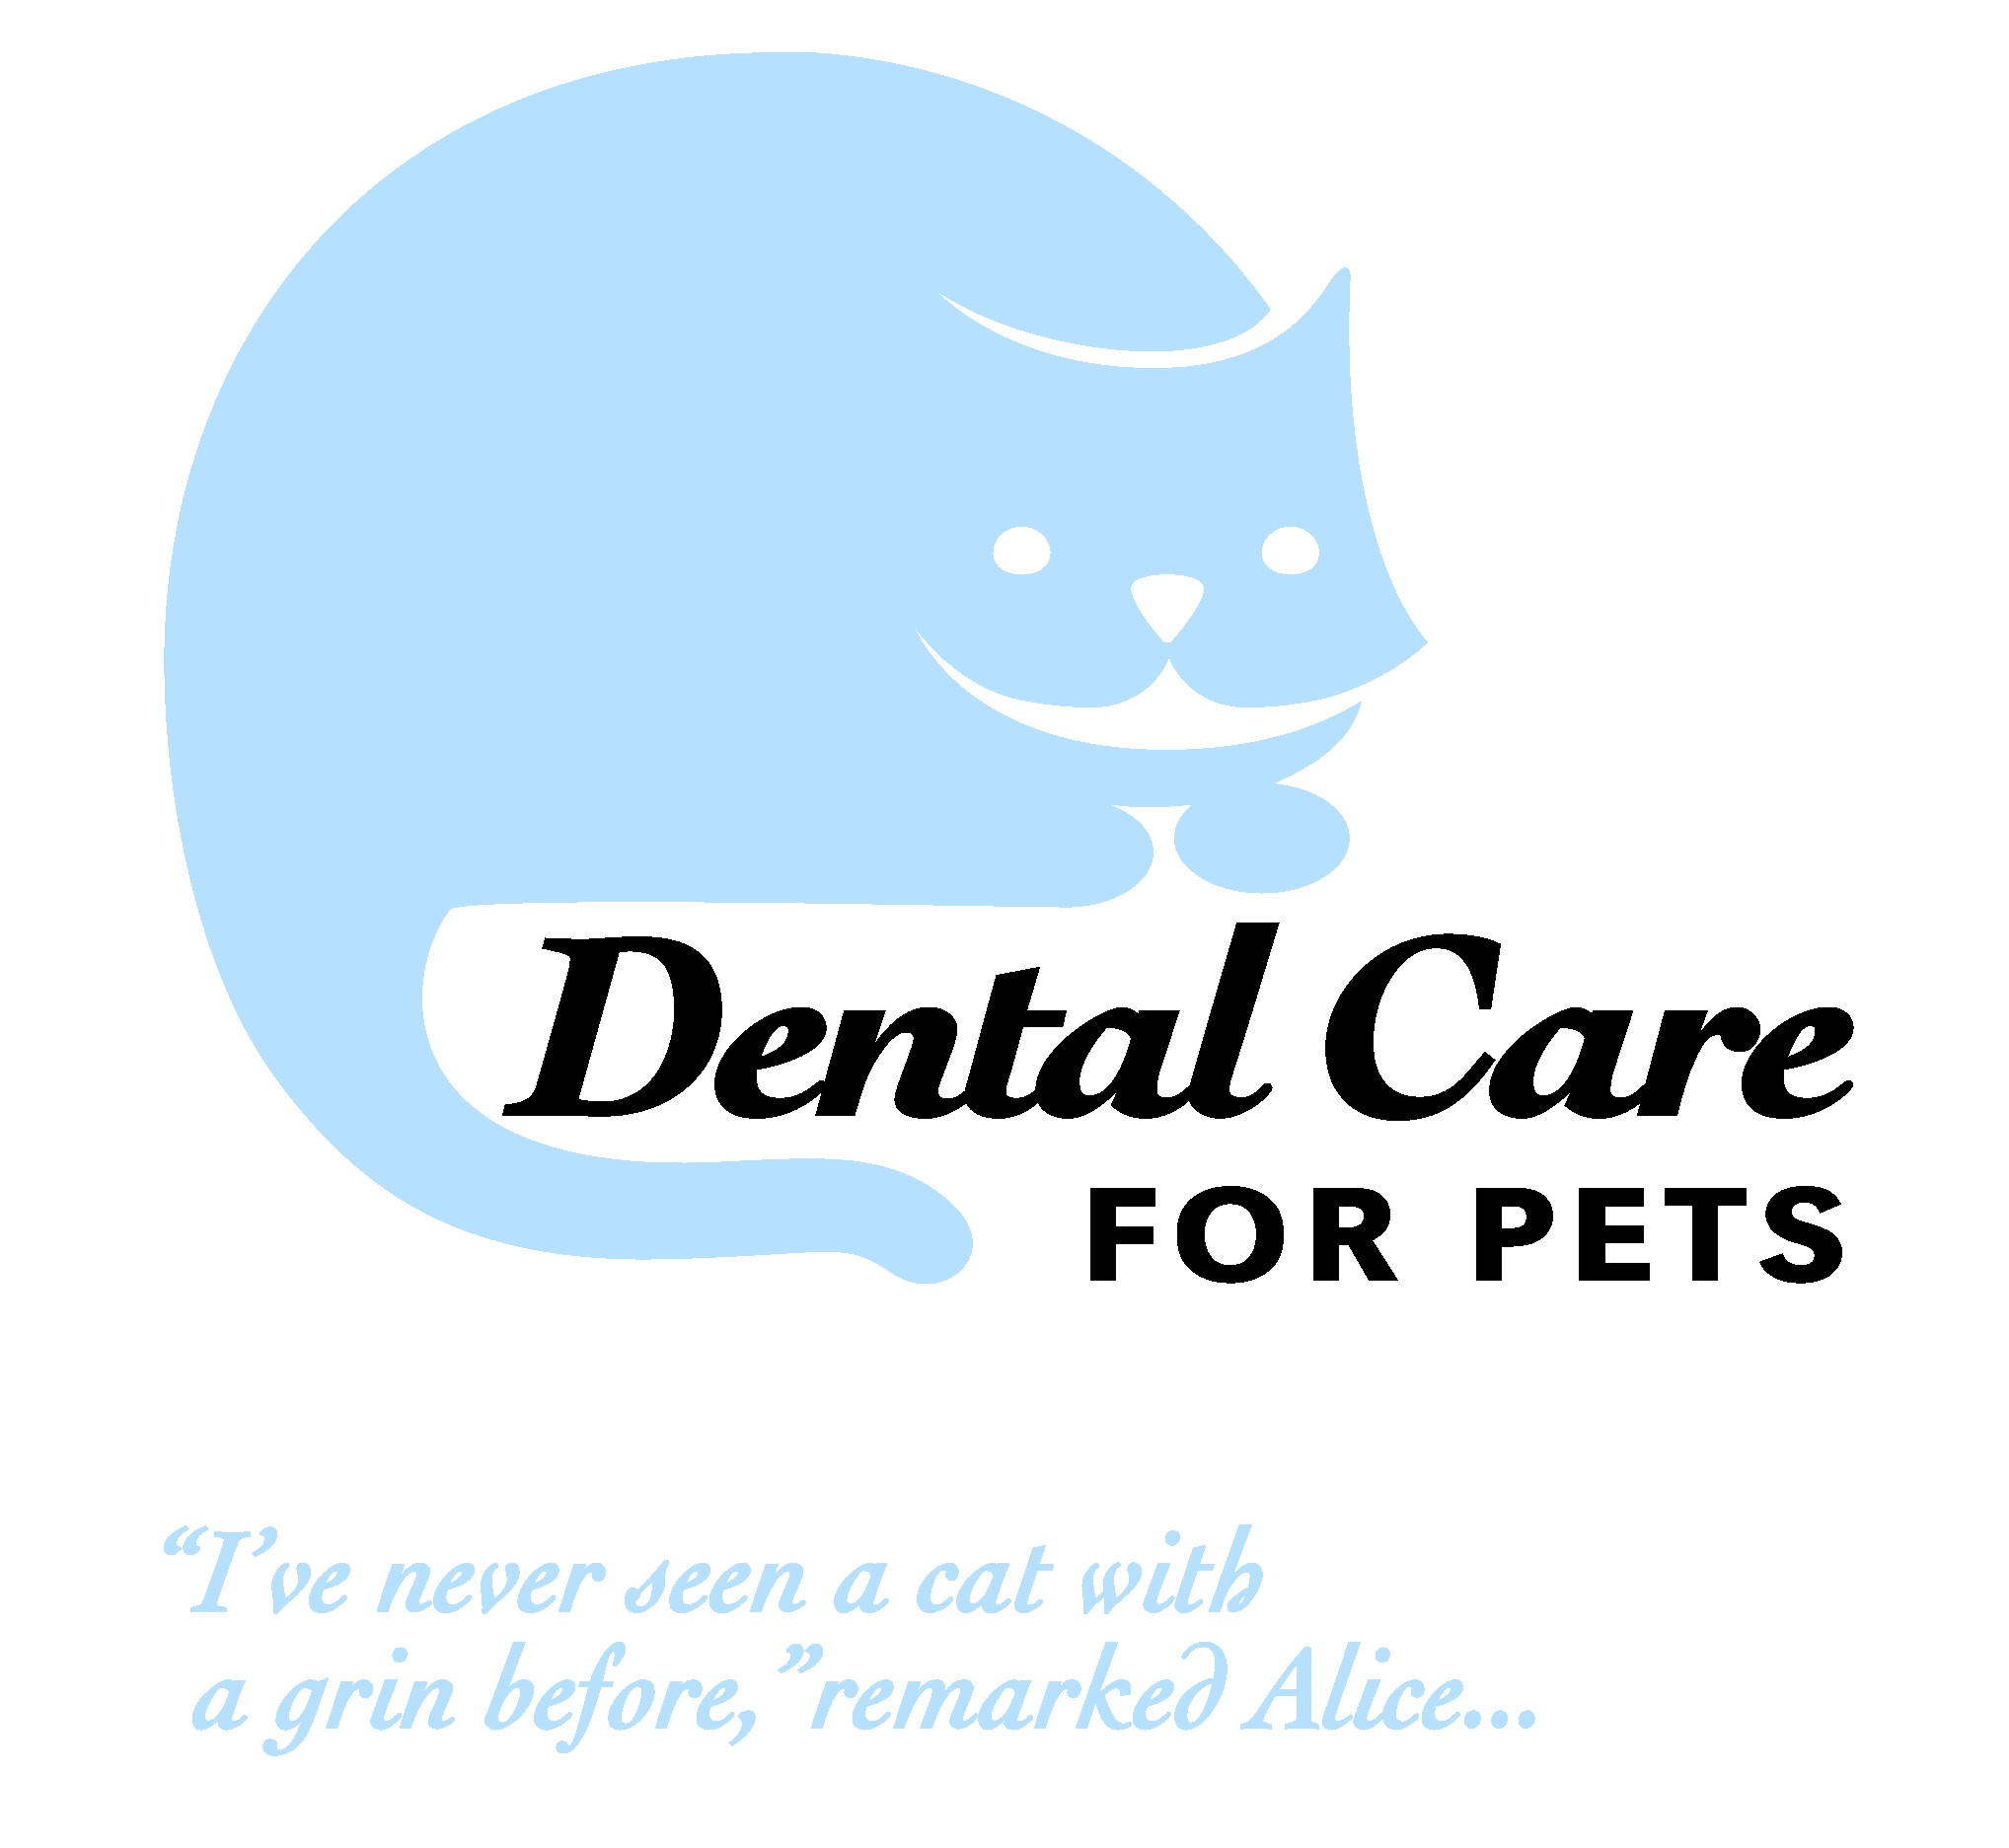 Dental Care For Pets